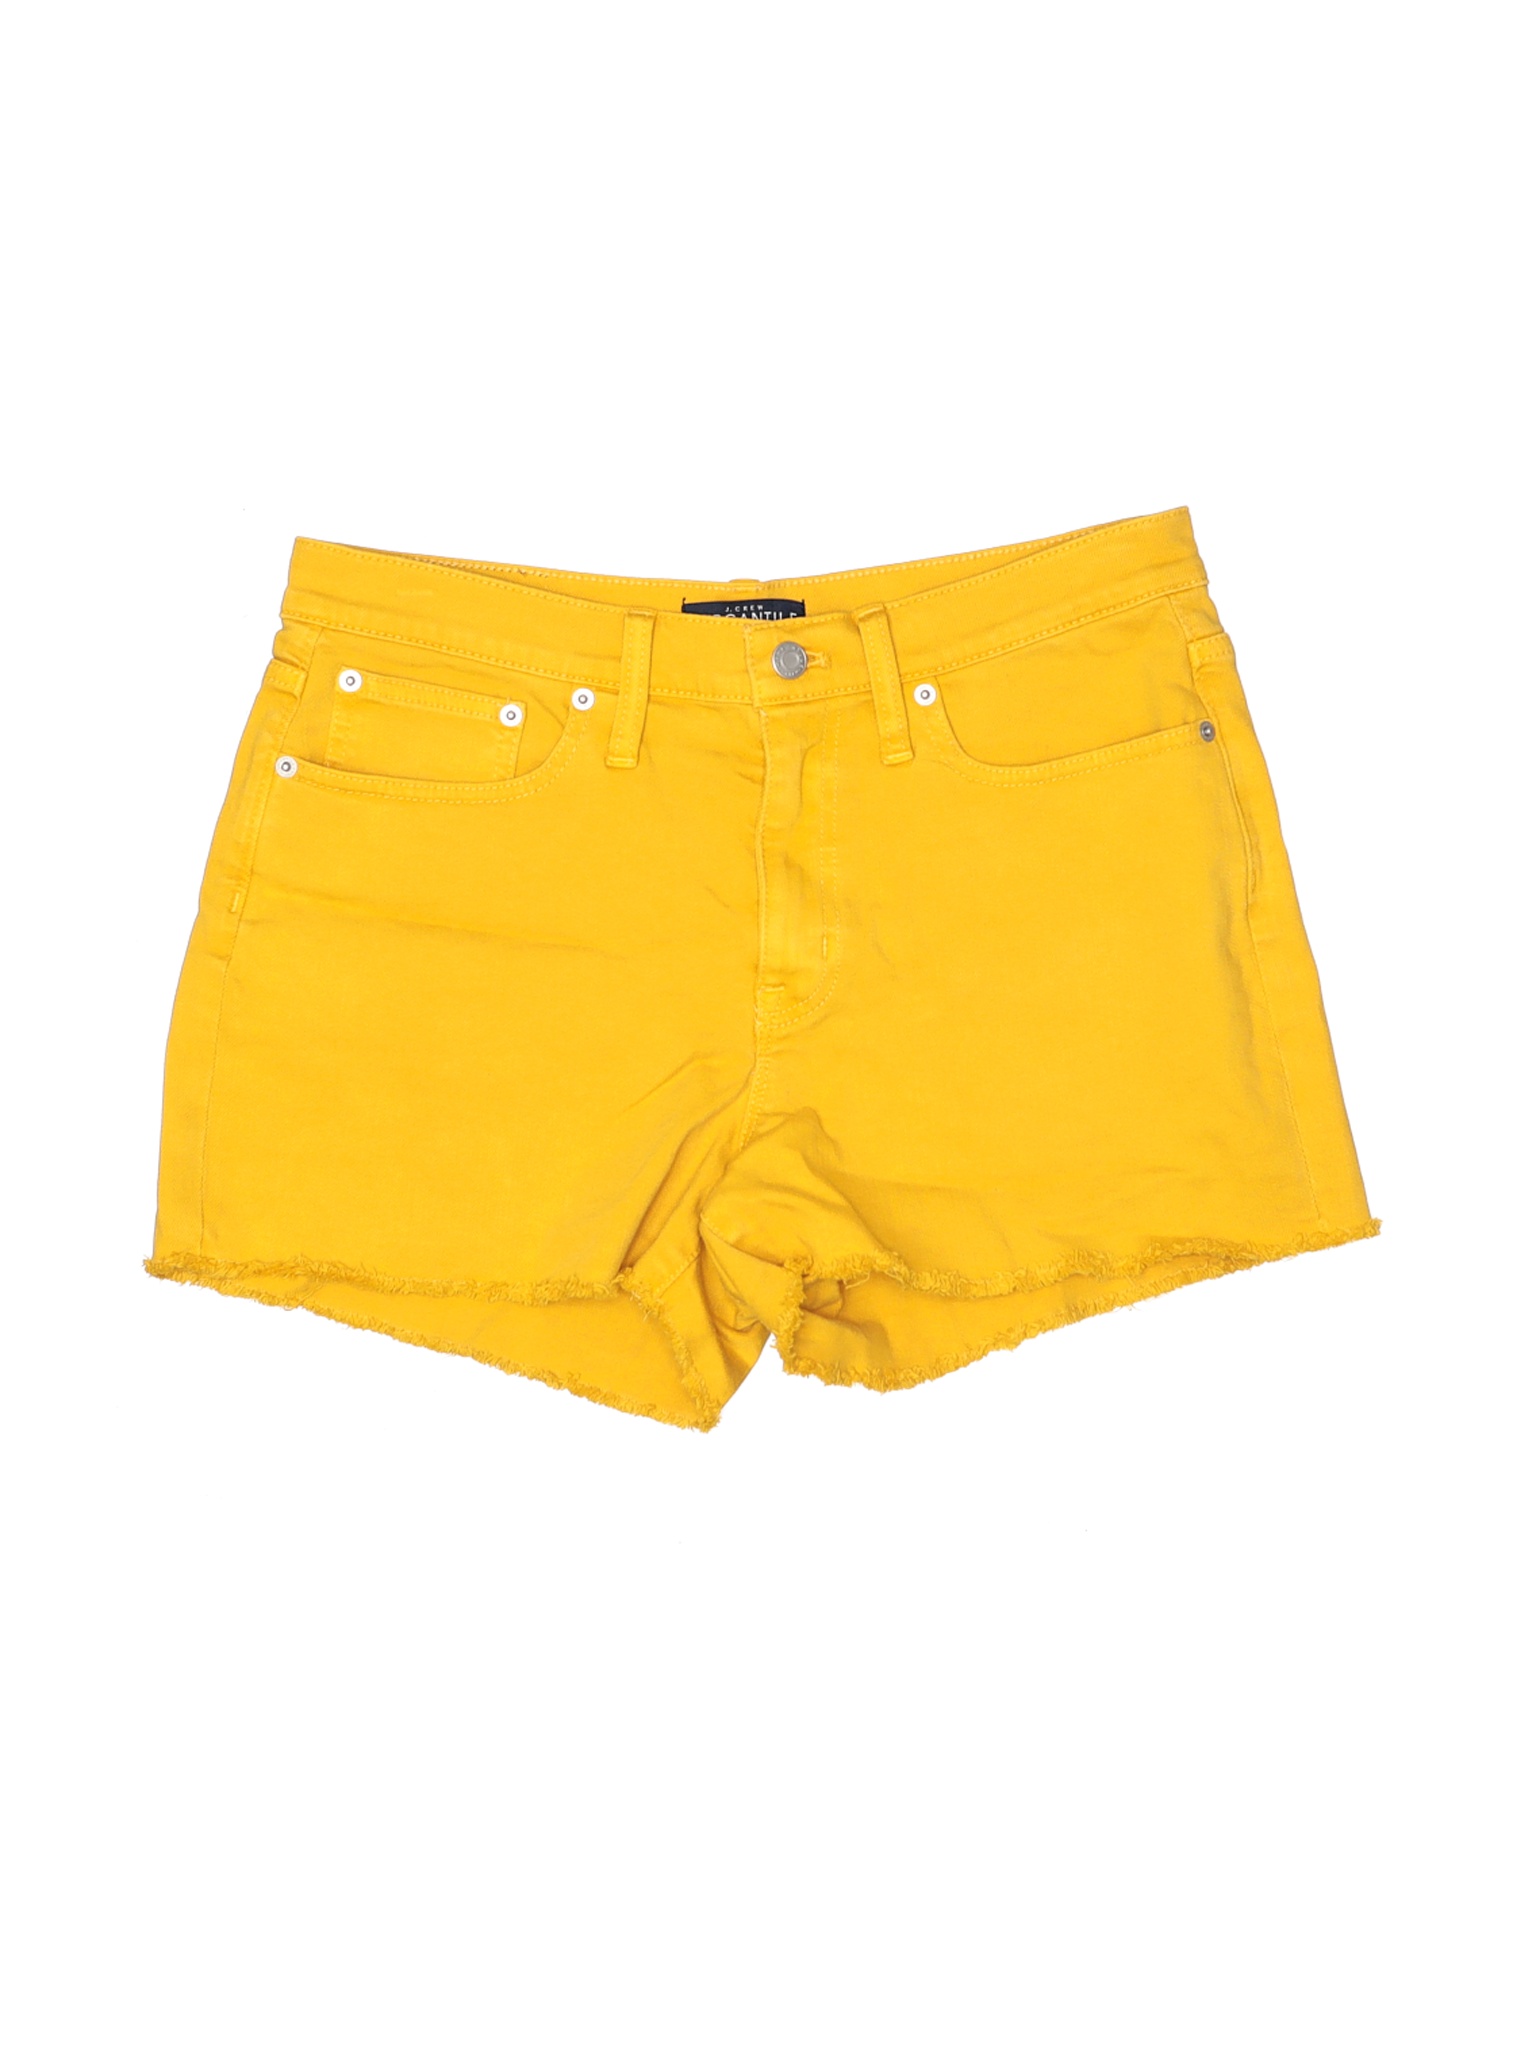 J.Crew Mercantile Women Yellow Denim Shorts 29W | eBay